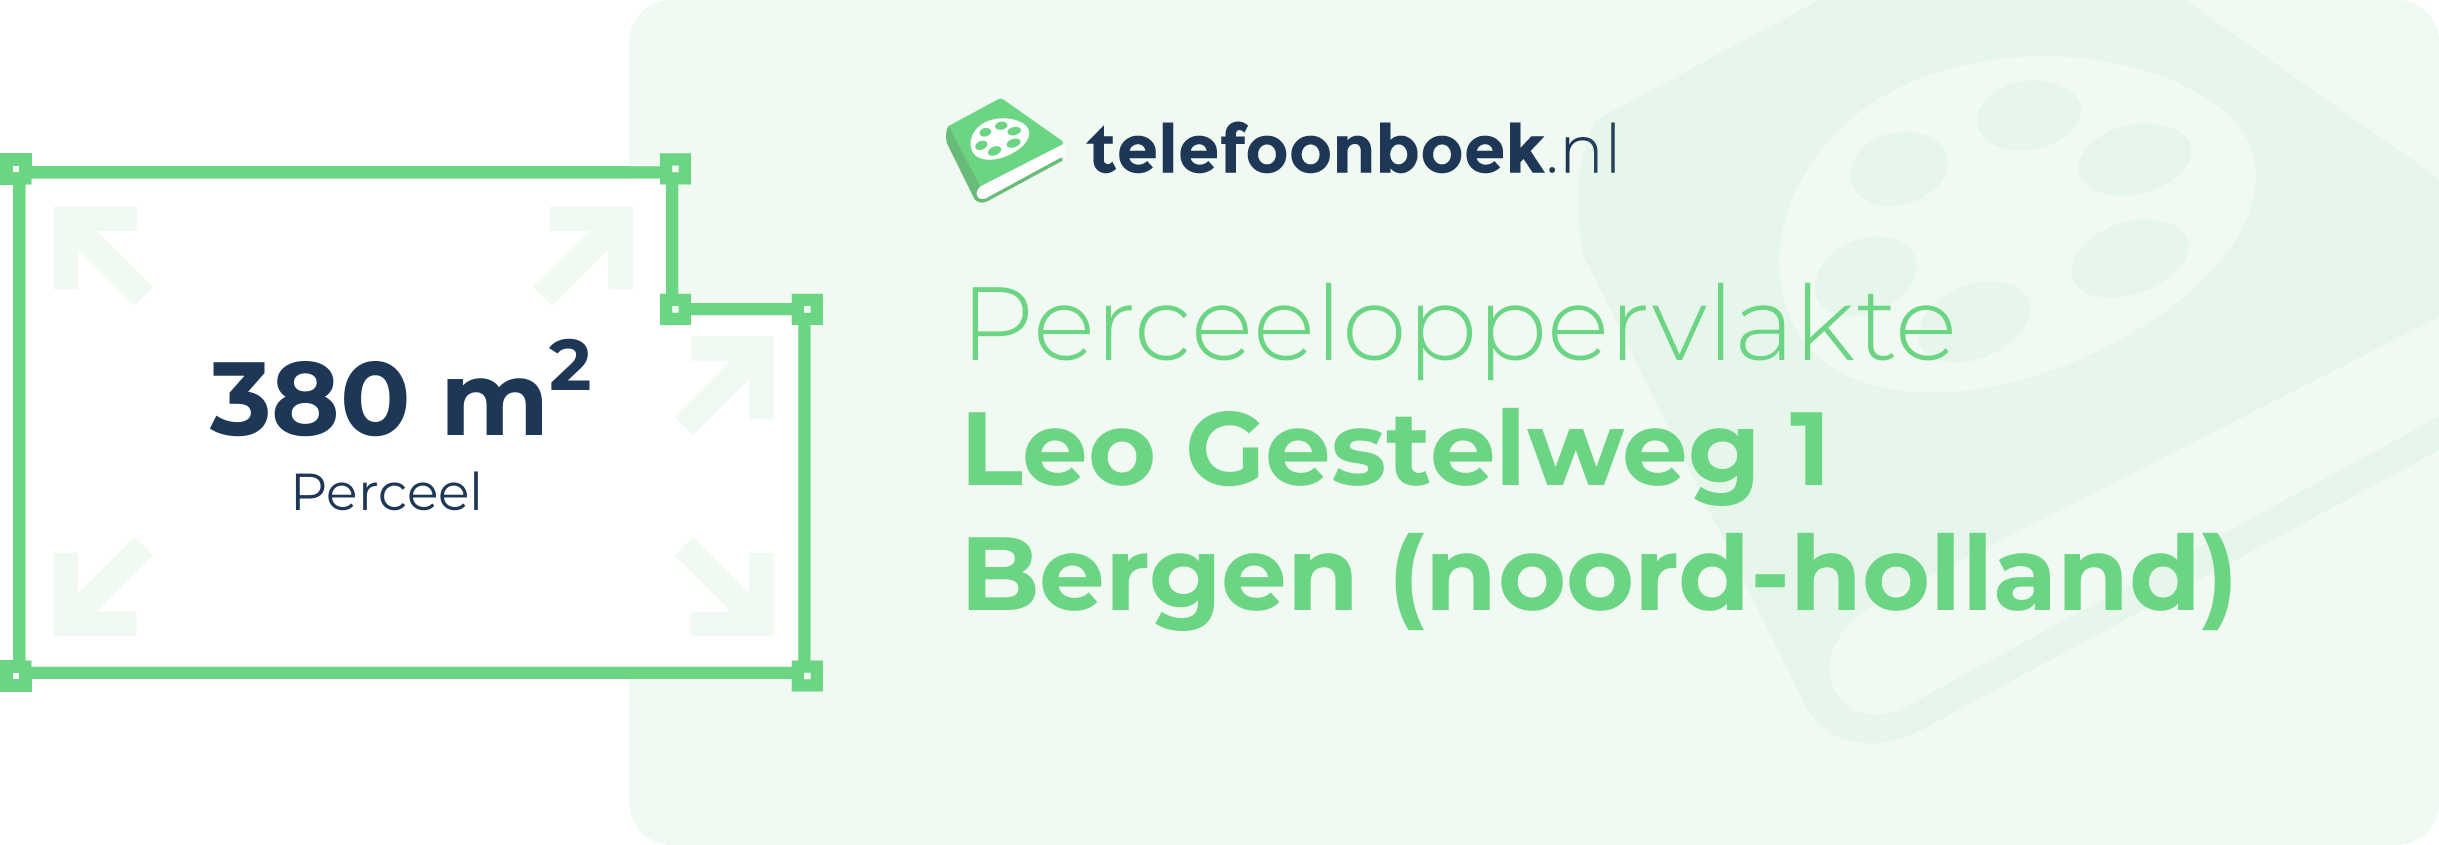 Perceeloppervlakte Leo Gestelweg 1 Bergen (Noord-Holland)